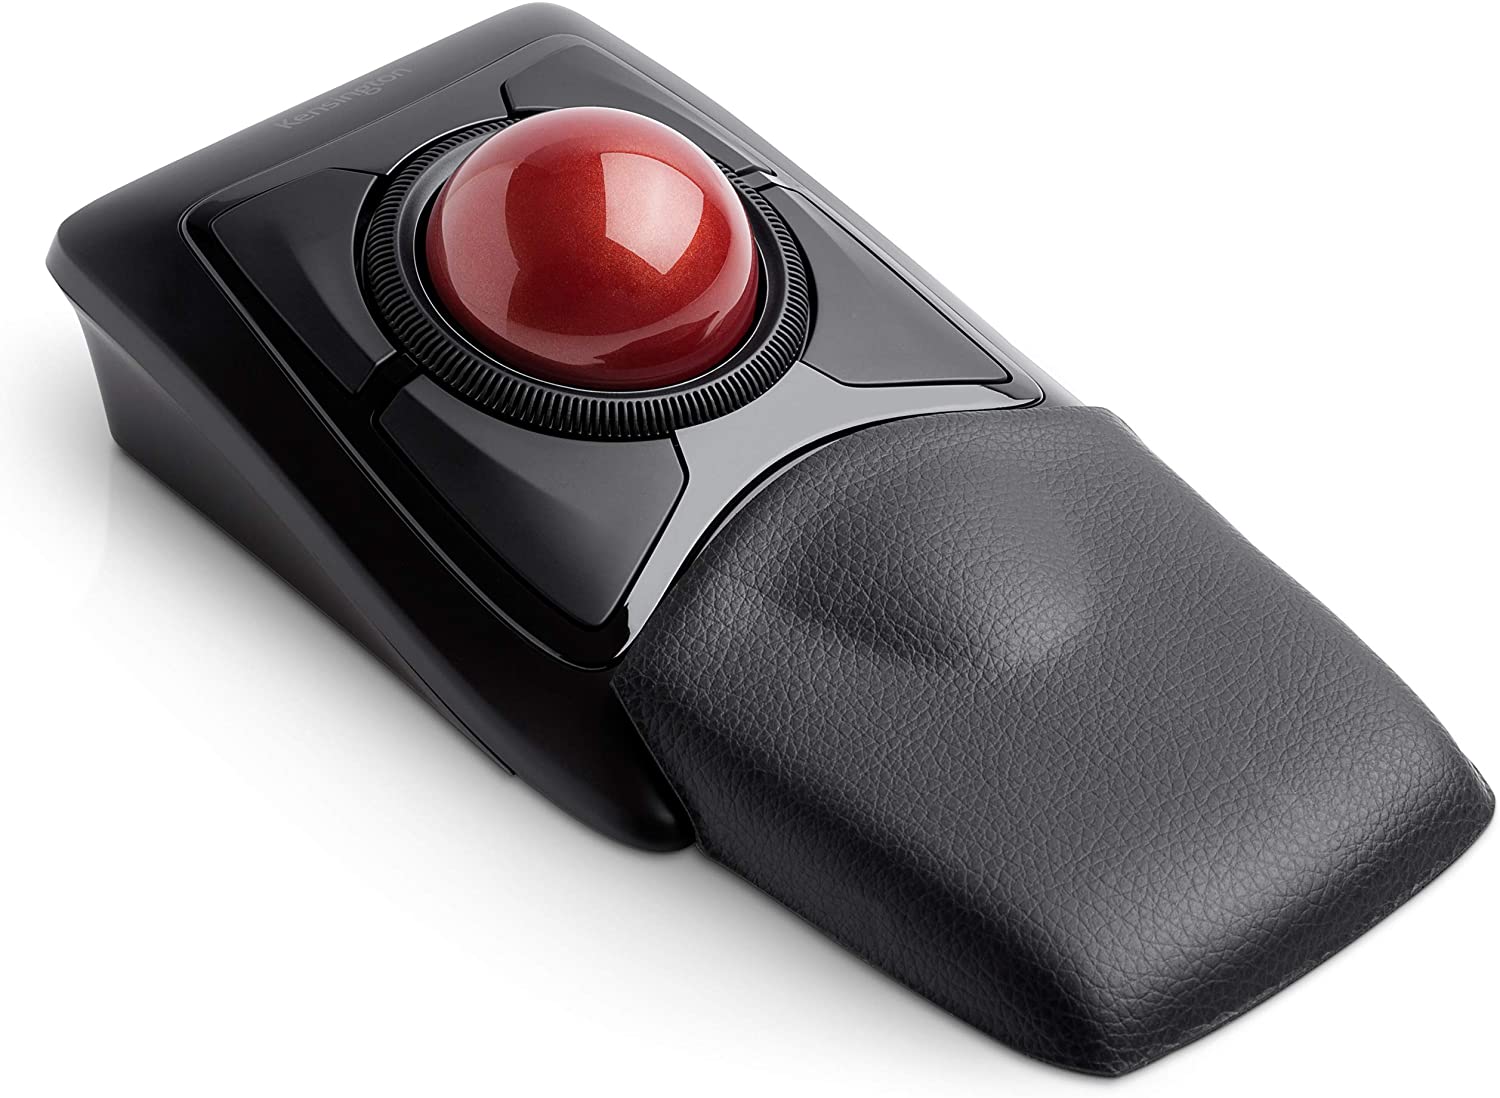 Thumbnail of Kensington Expert Wireless Trackball Mouse.